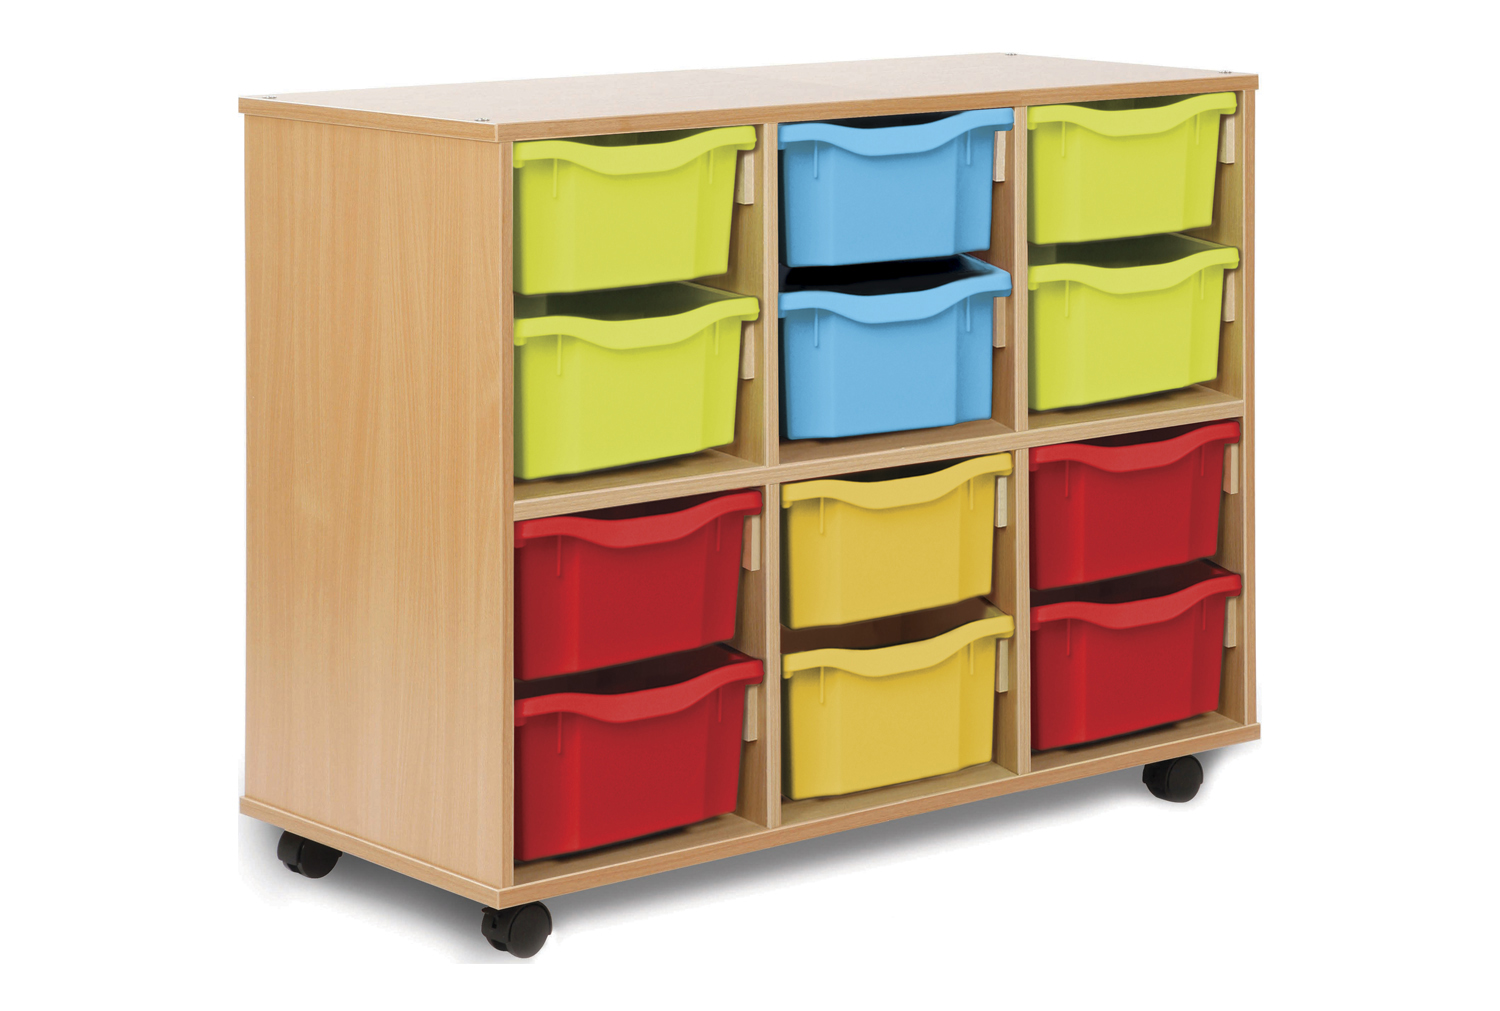 Allsorts 12 Deep Classroom Tray Storage Unit, Red/Blue/Green/Yellow Classroom Trays